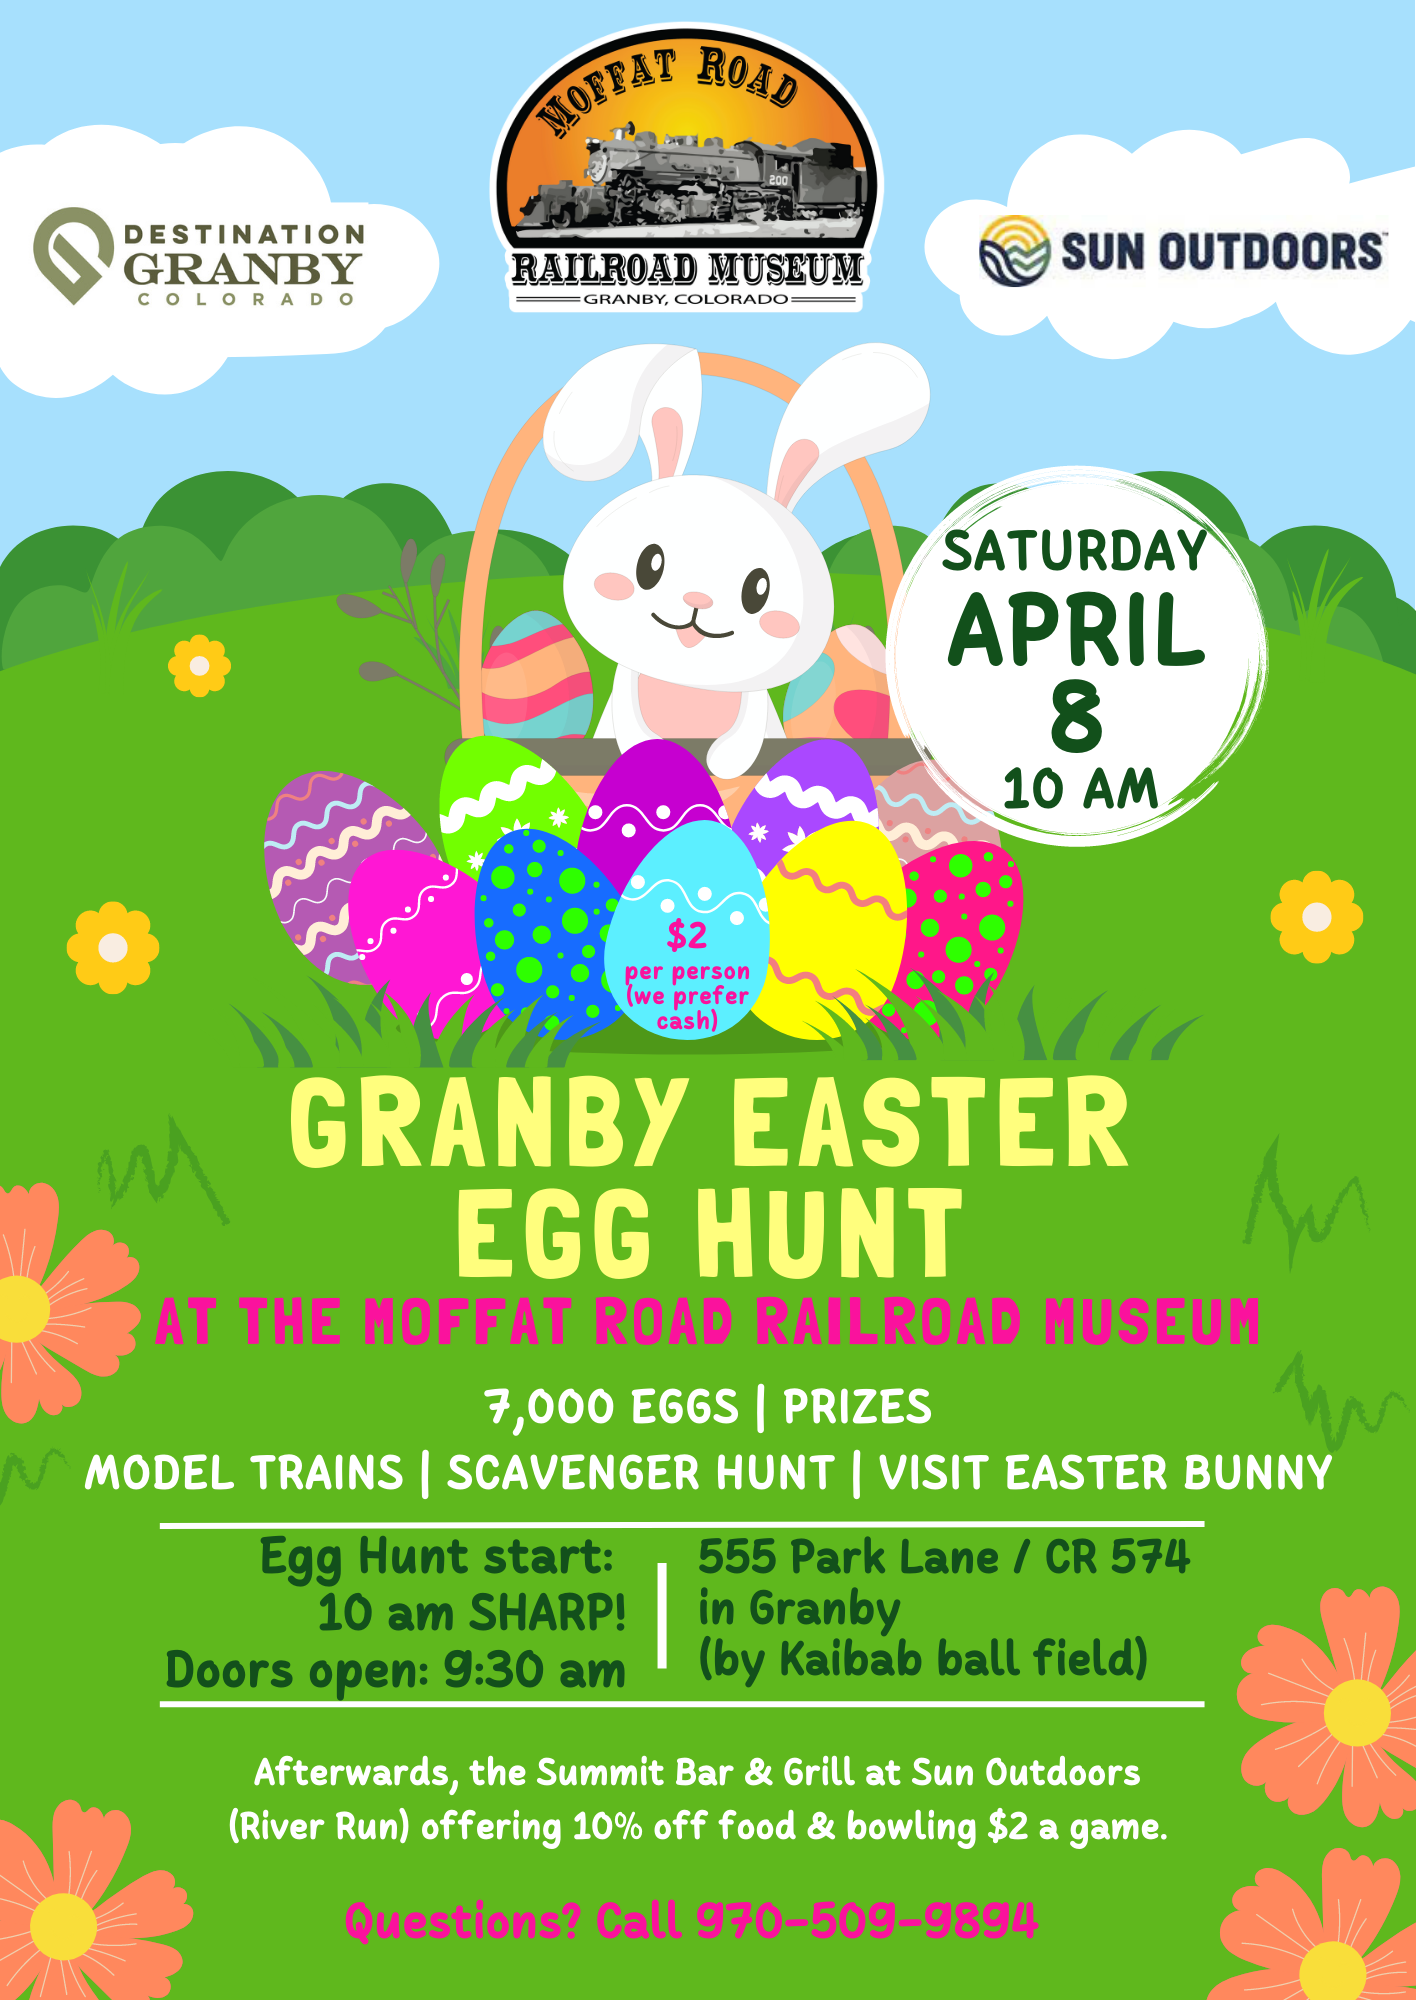 Granby Easter Egg Hunt at The Moffat Road Railroad Museum April 8 at 10 am